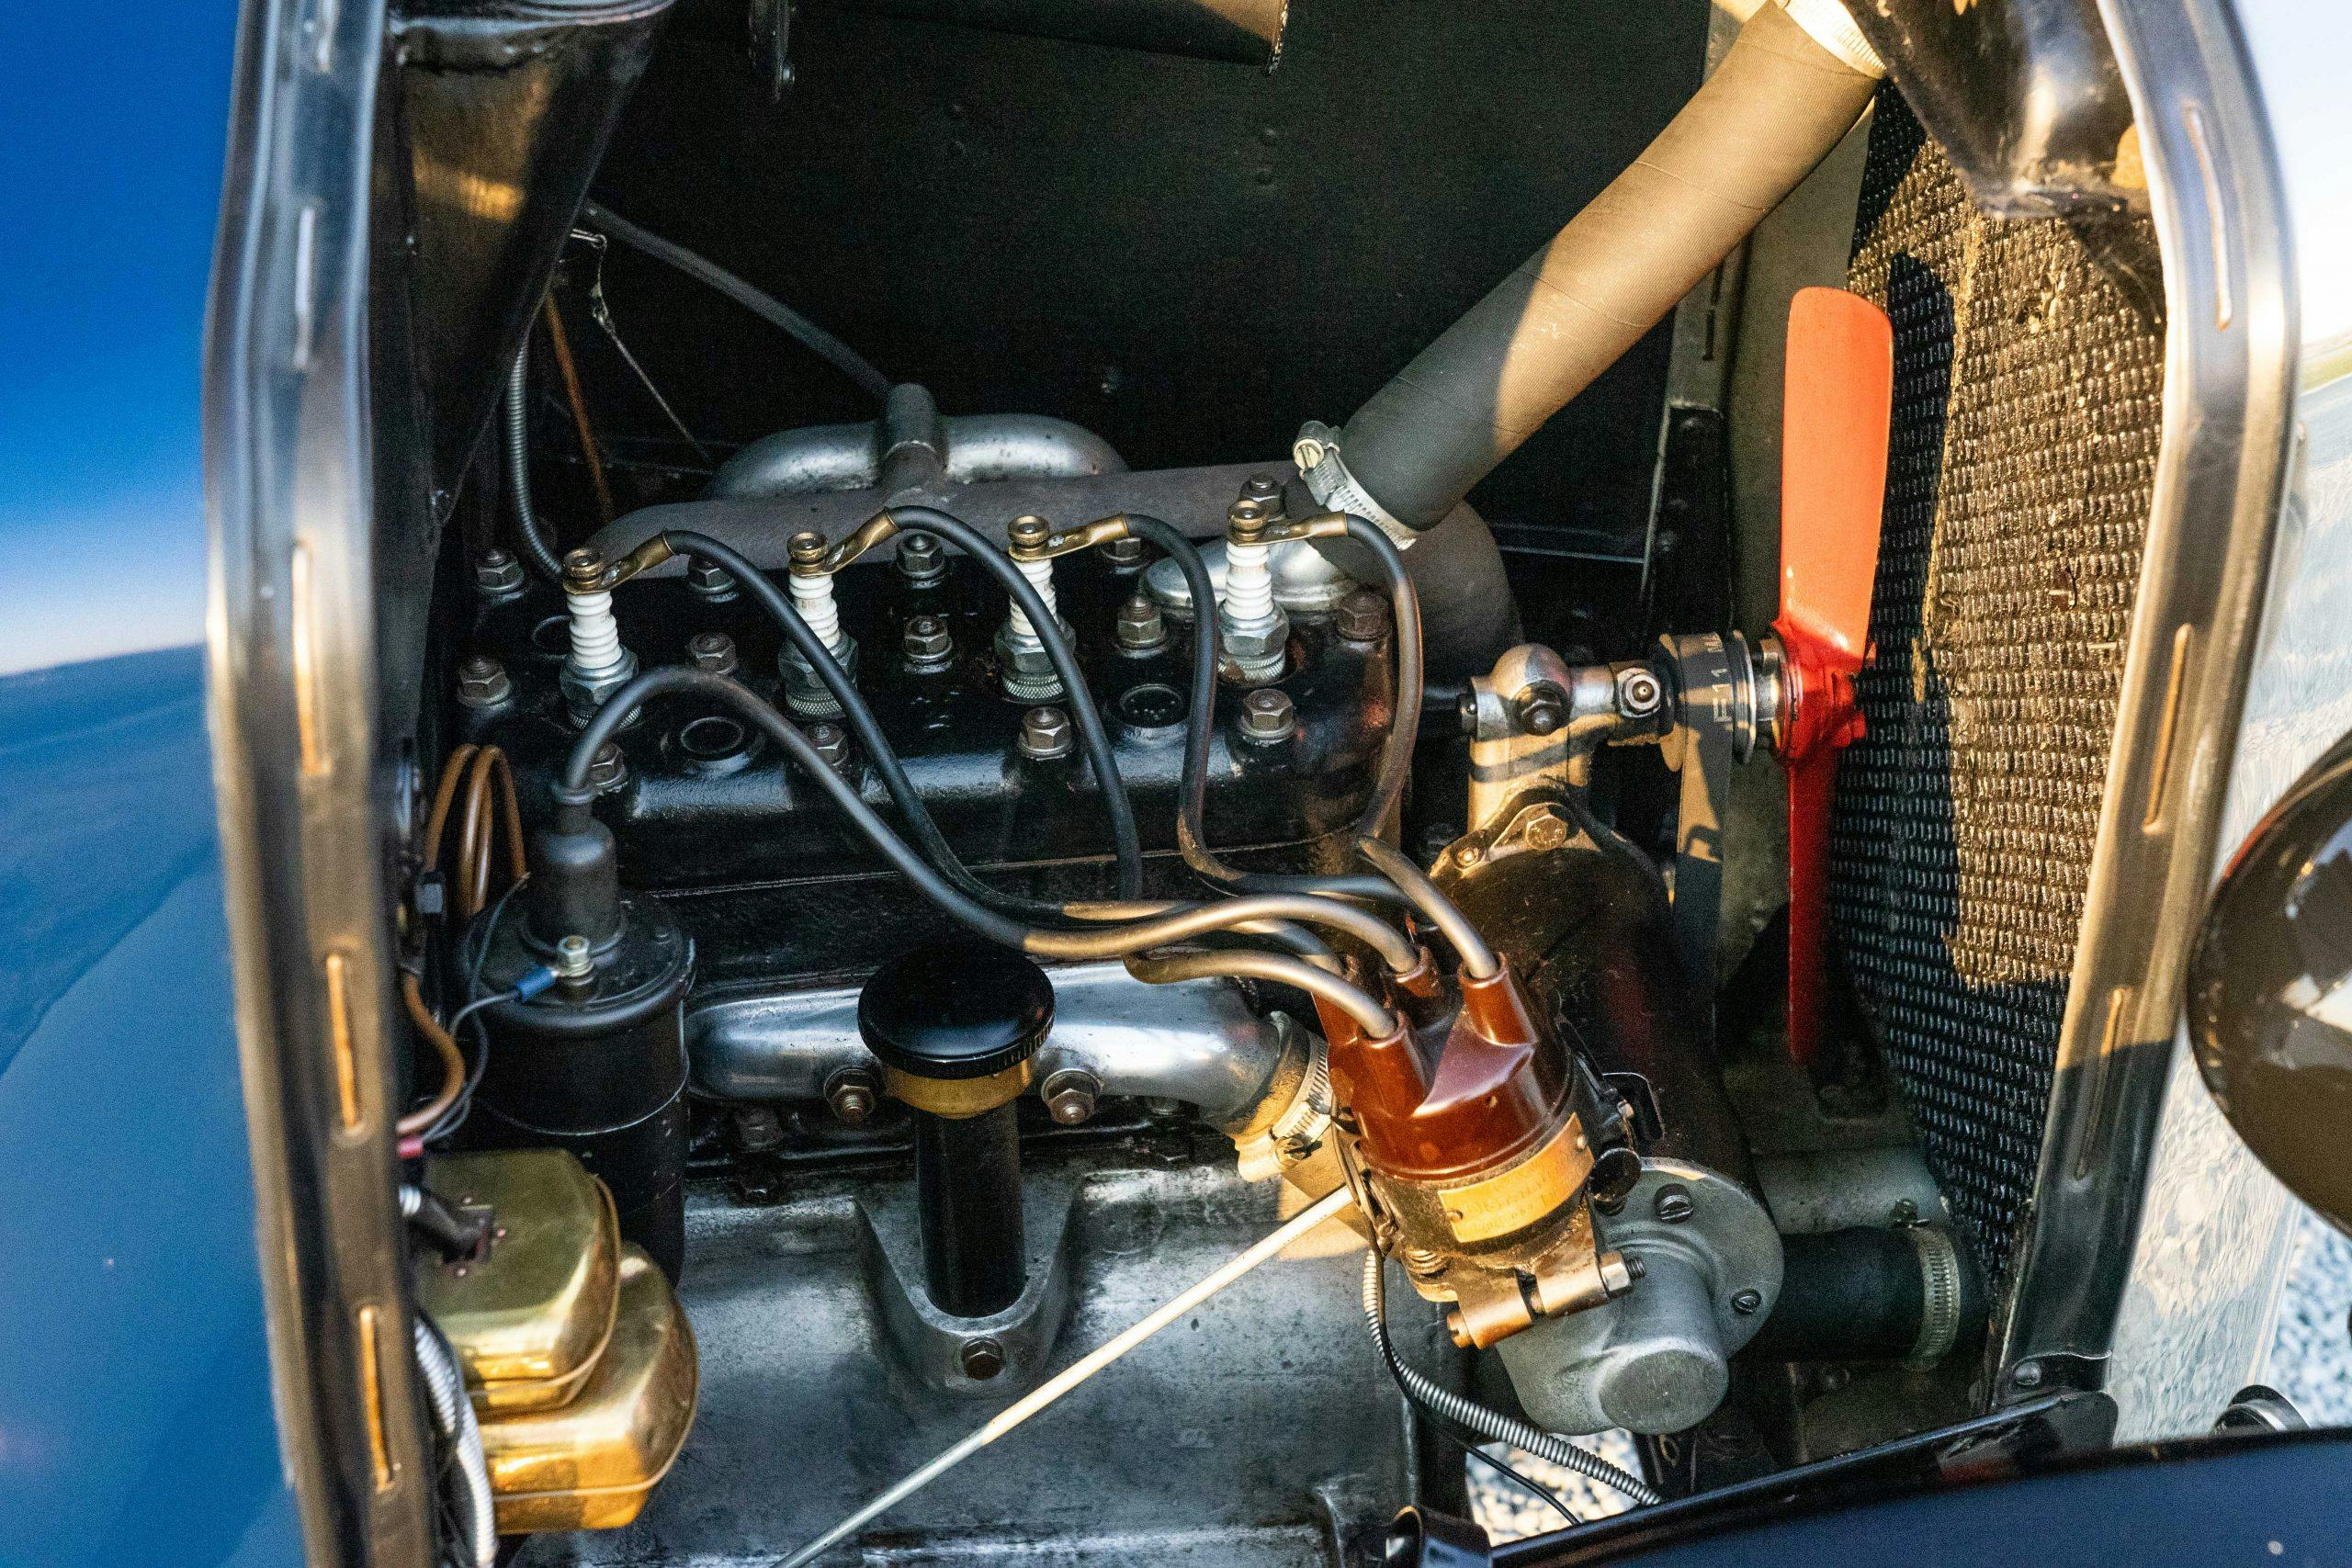 Austin 7 vintage car engine